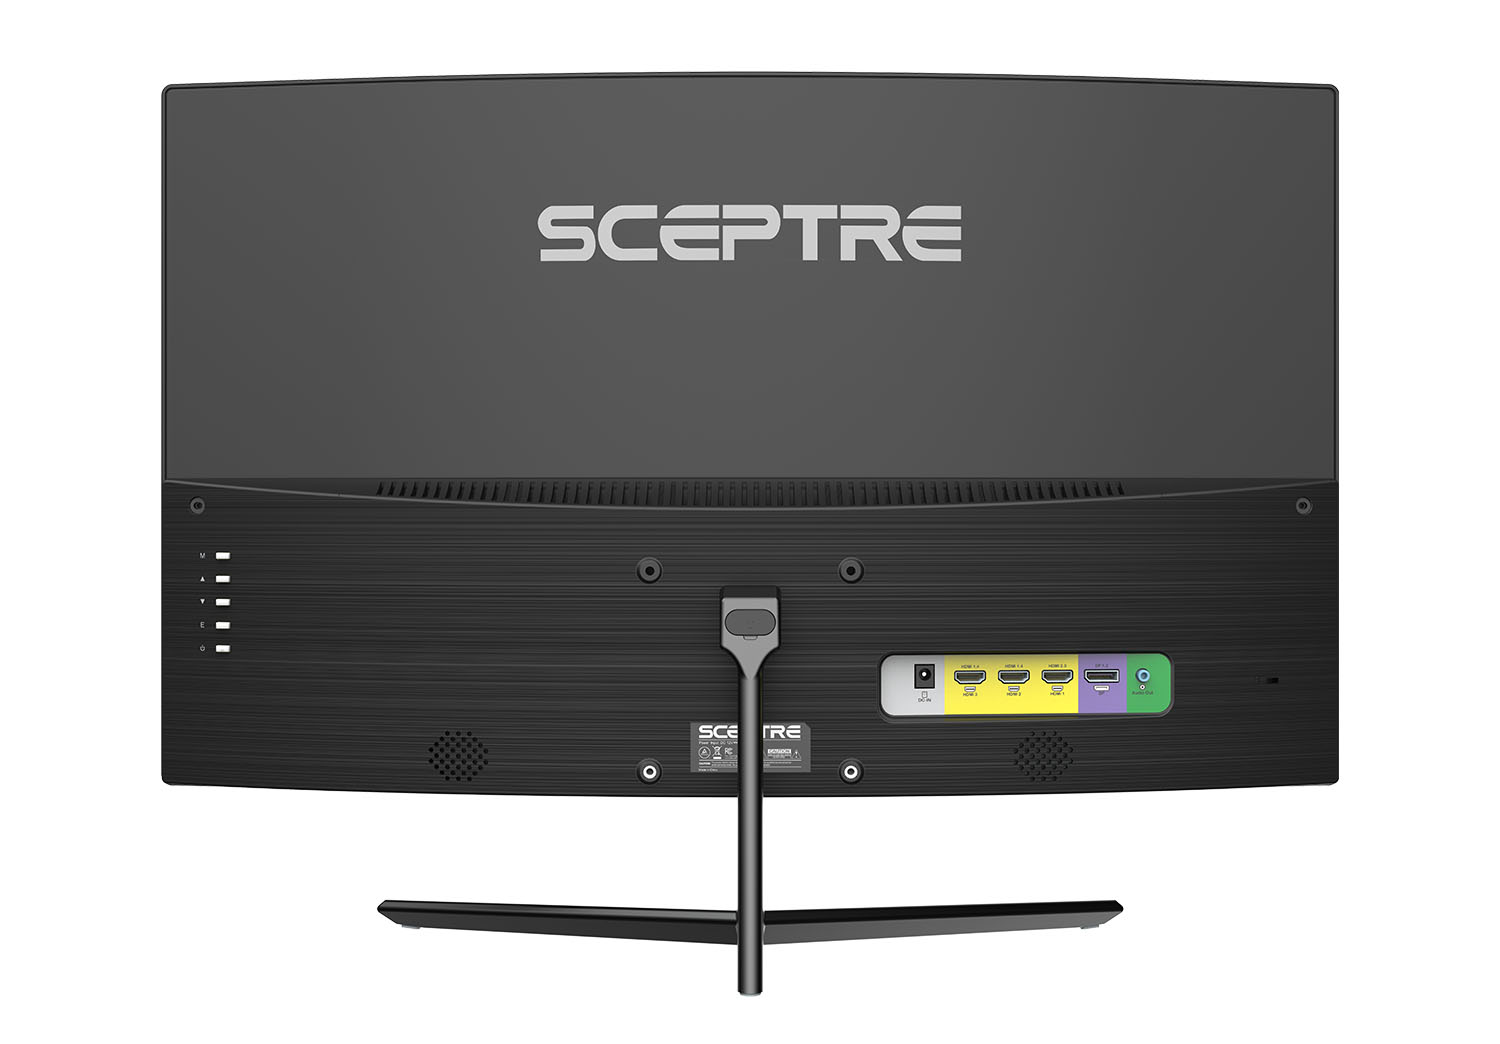 Sceptre IPS 24” Gaming Monitor 165Hz 144Hz Full HD (1920 x 1080) FreeSync  Eye Care FPS RTS DisplayPort HDMI Build-in Speakers, Machine Black 2020